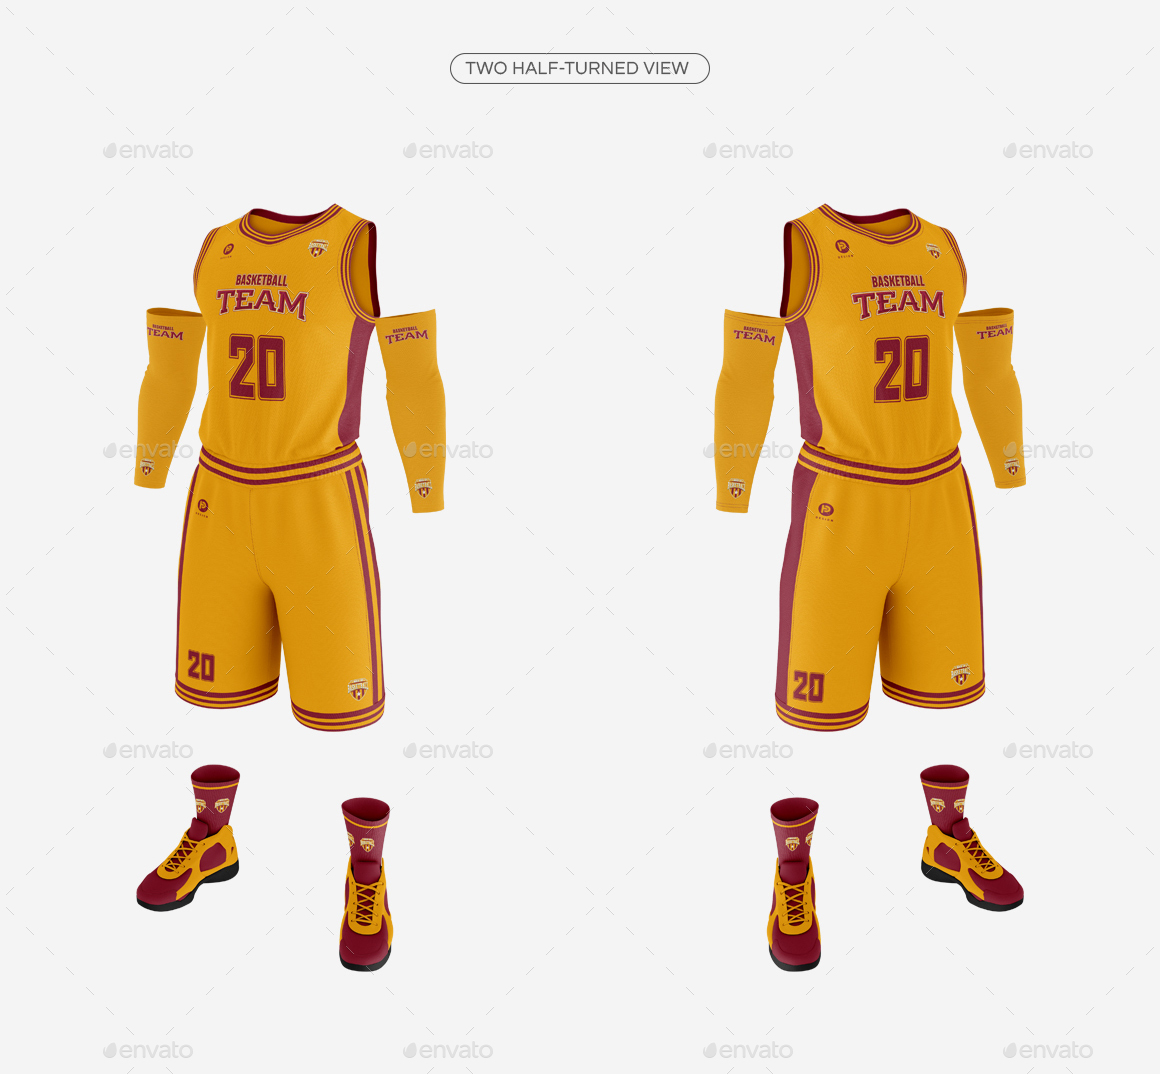 Download Mockup Basketball Uniform Free - Basketball jersey mockup ...